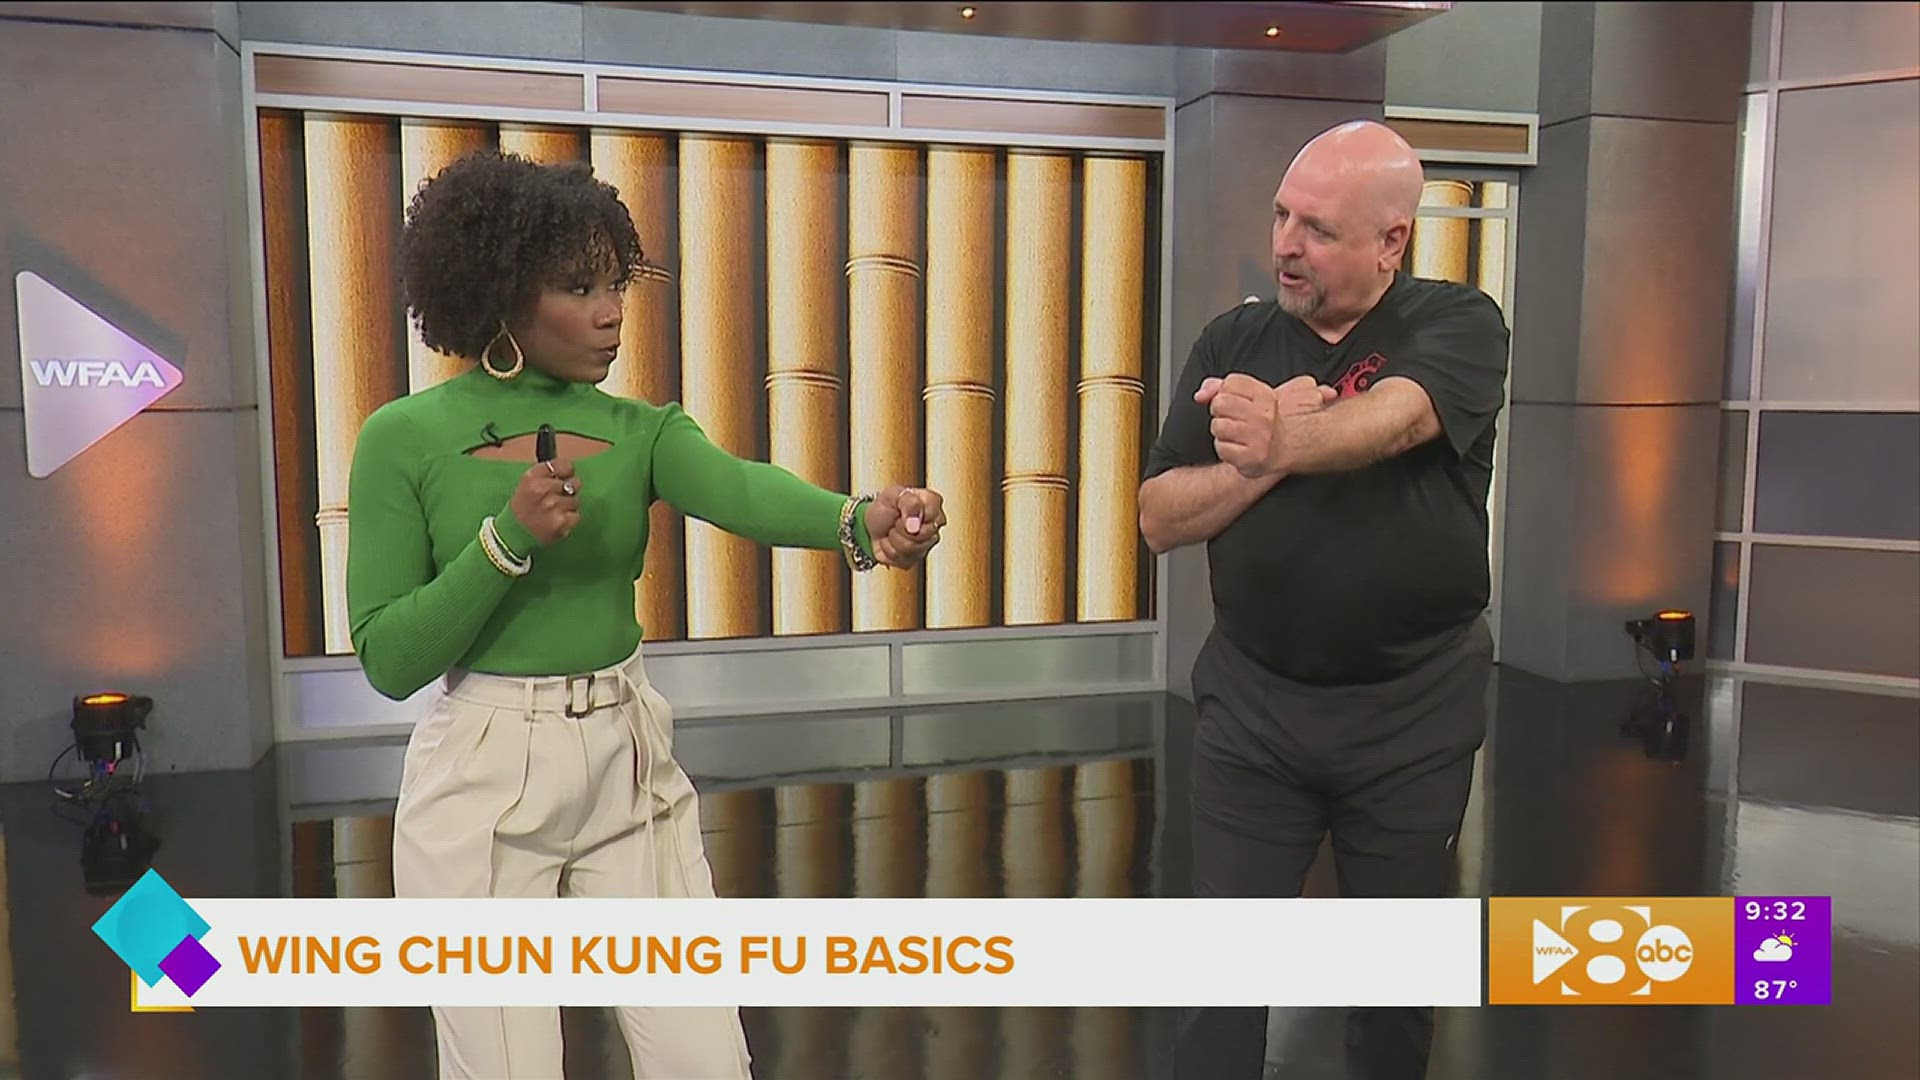 Dallas Wing Chun Academy SiFu Jim Gillentine shows us some basic Wing Chun moves. Go to dallaswingchun.com for more information.